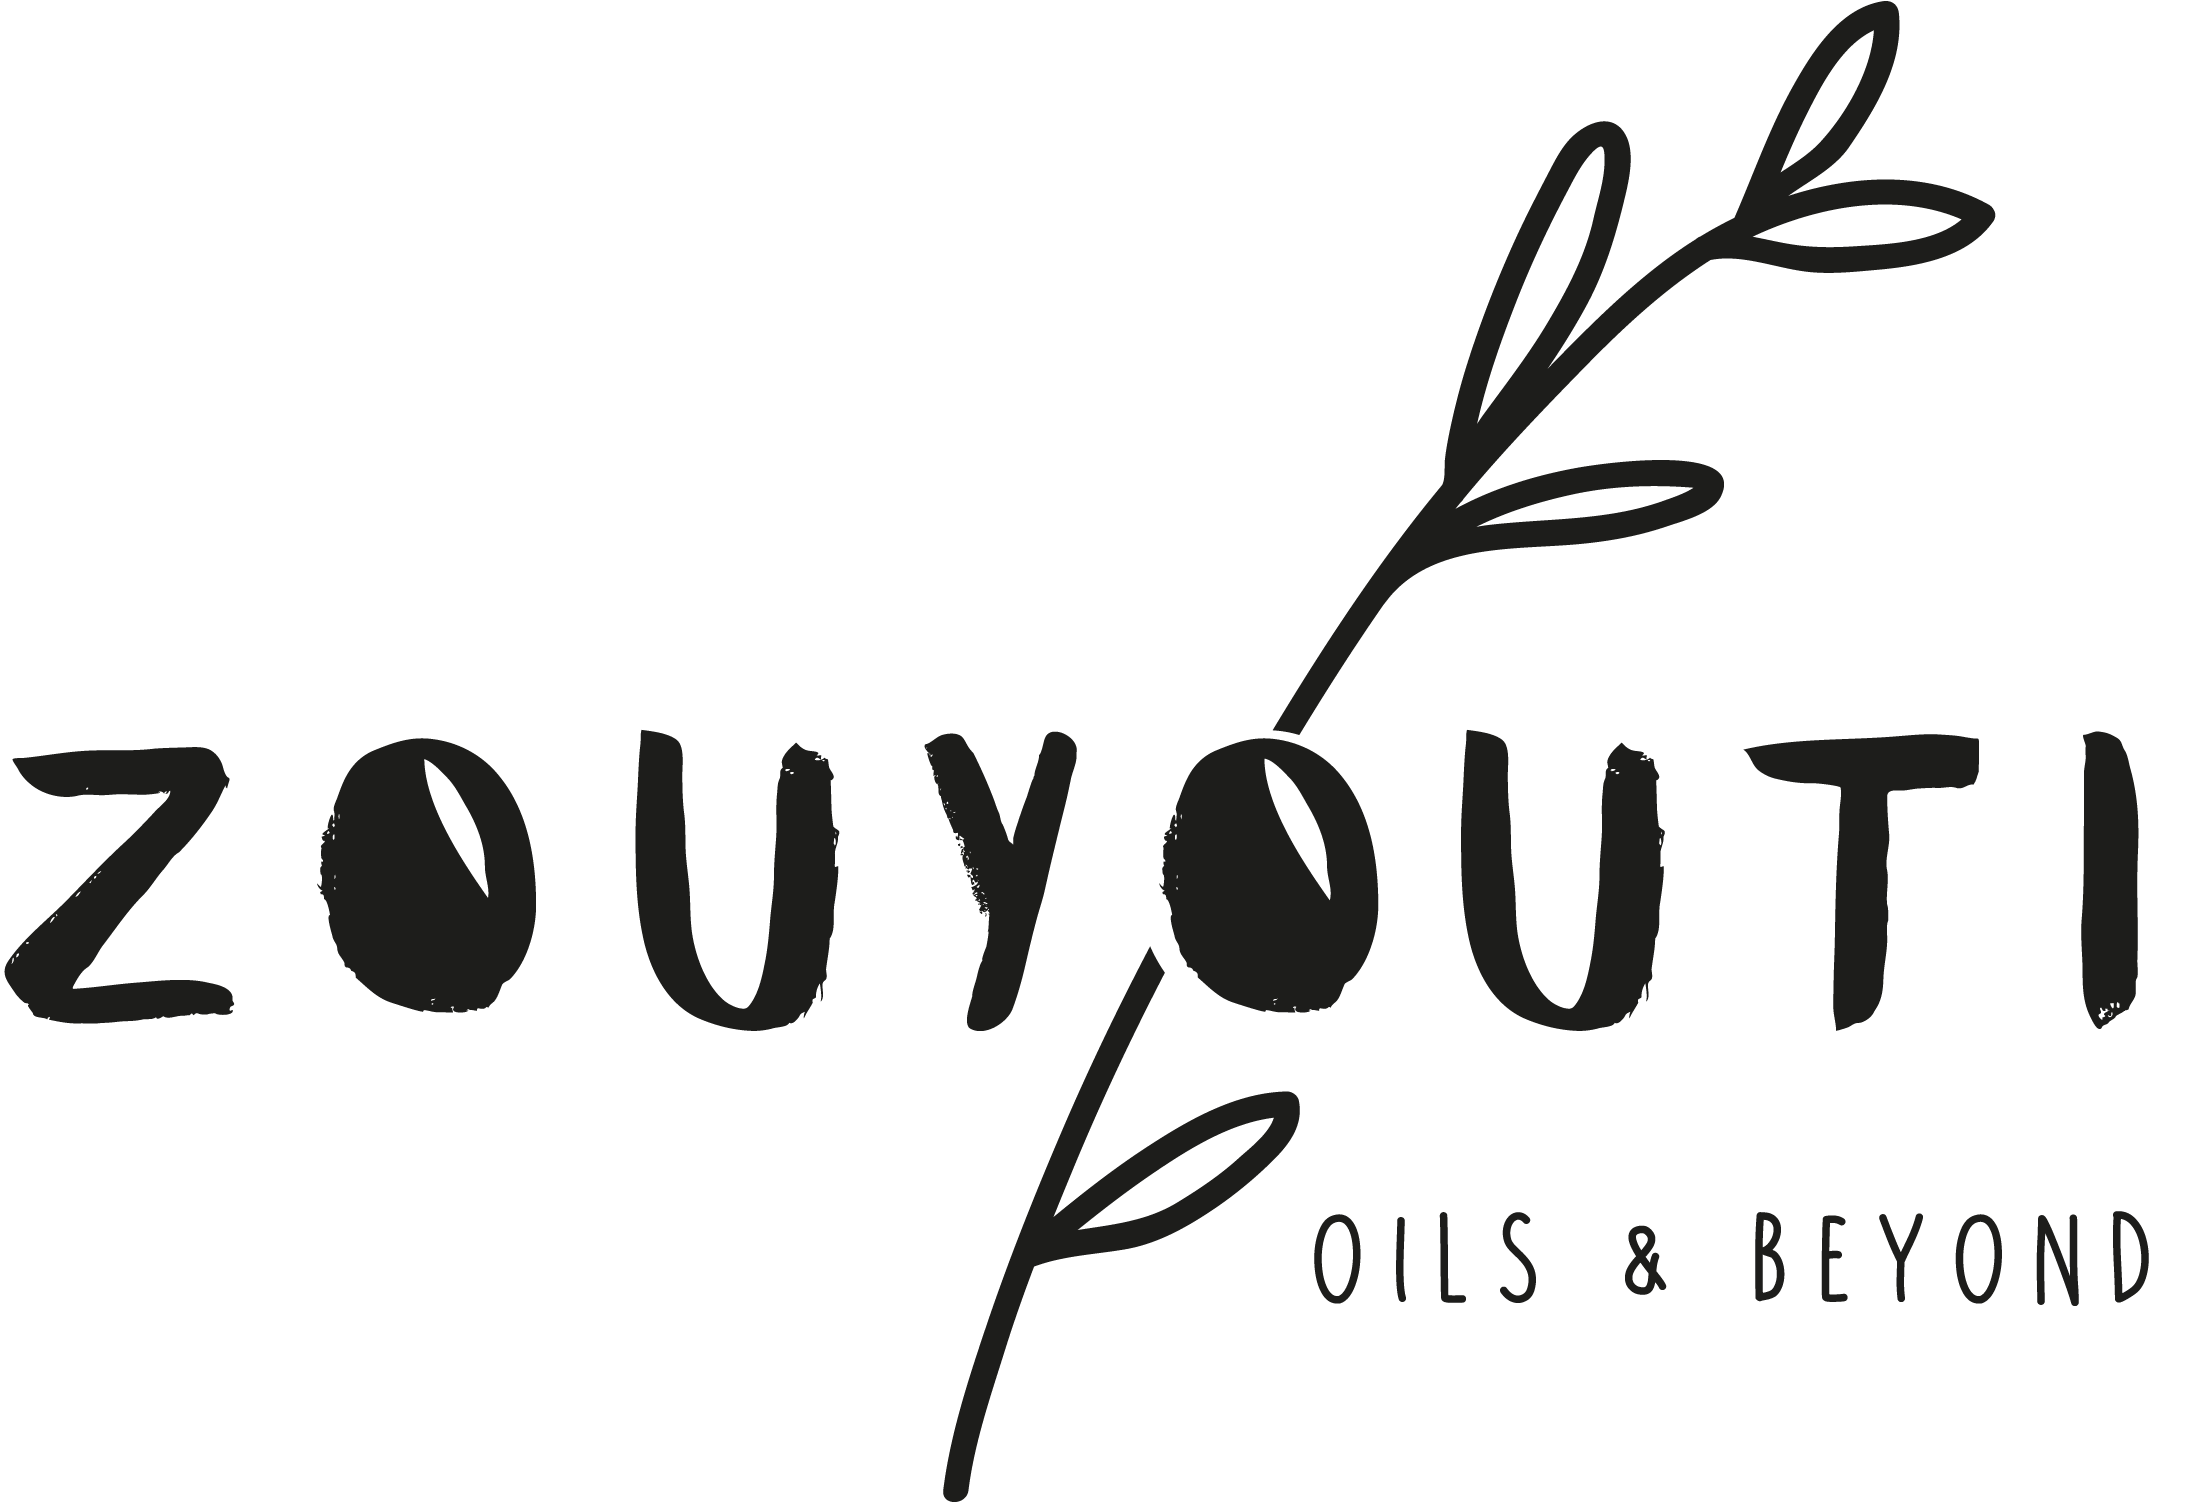 Zouyouti logo